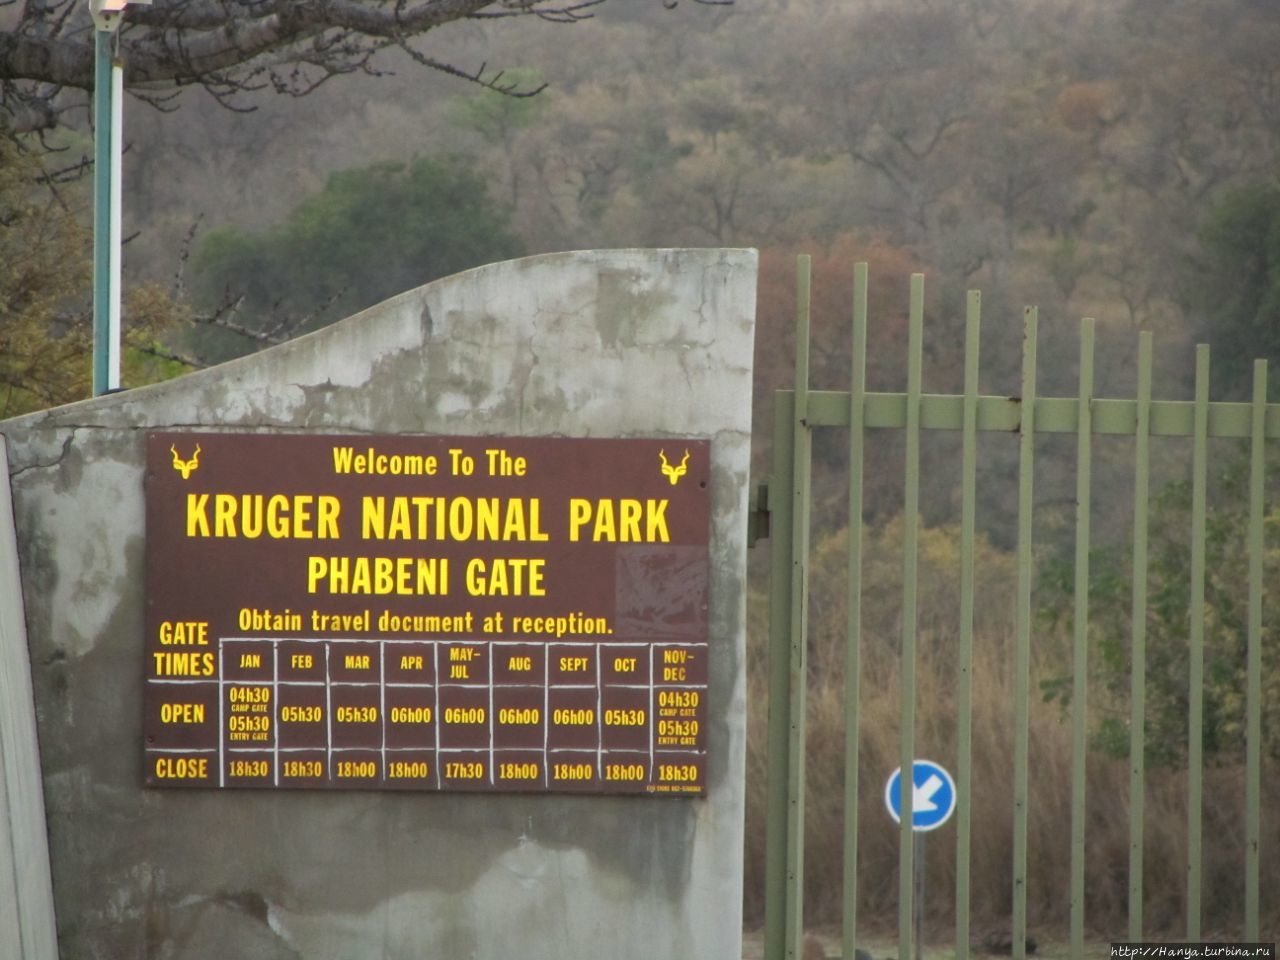 Ворота Фабени, Парк Крюгера / Phabeni Gate, Kruger National Park